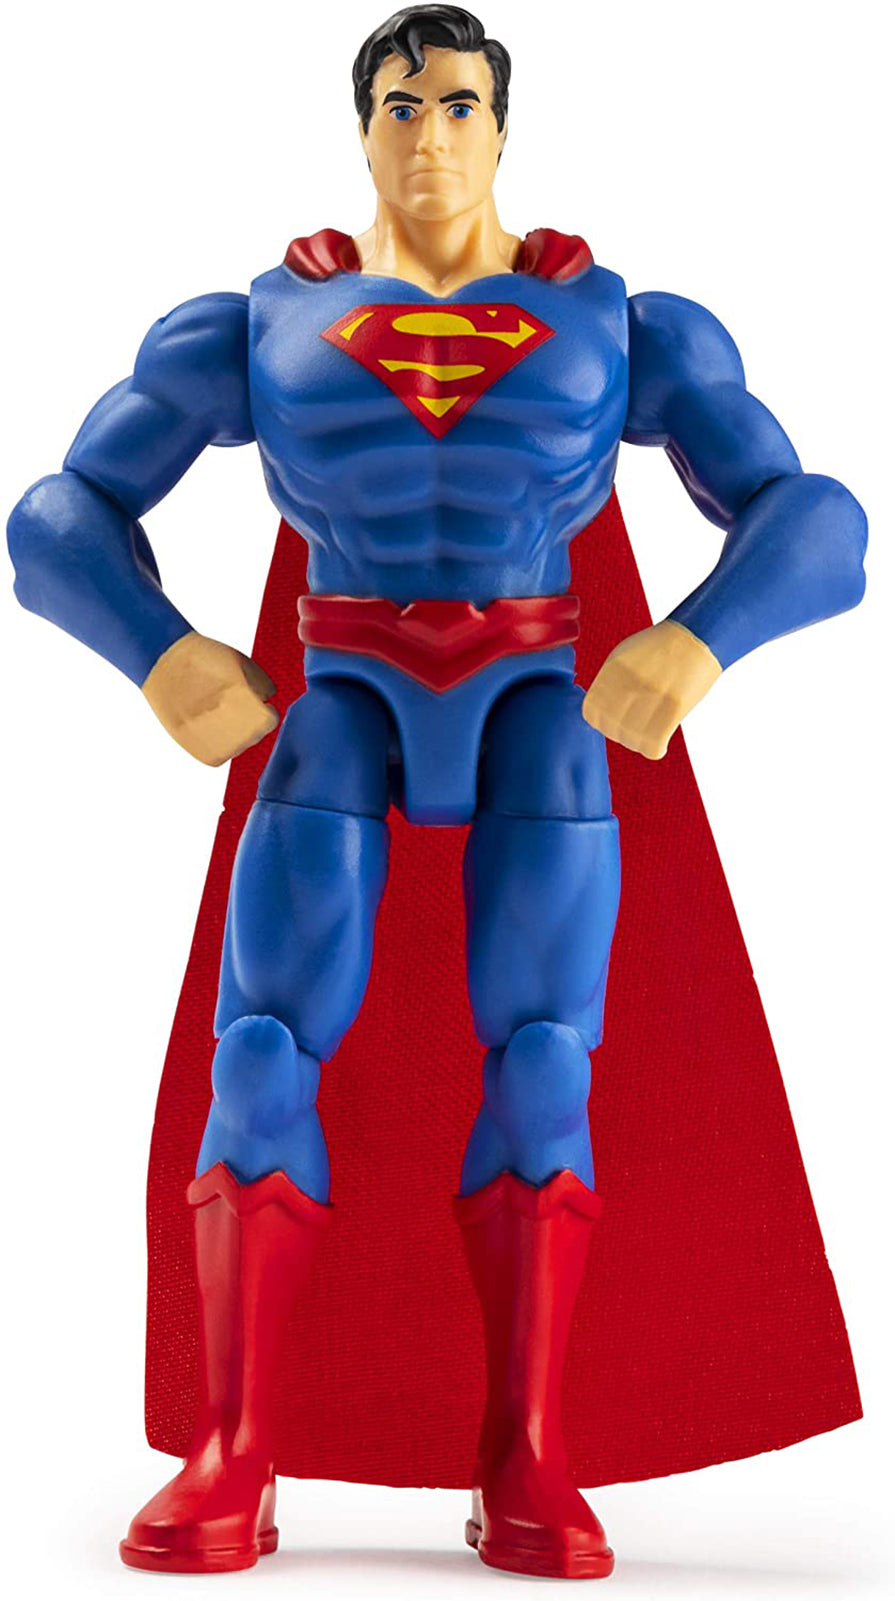 DC Heroes Unite 4 inch Action Figure Superman